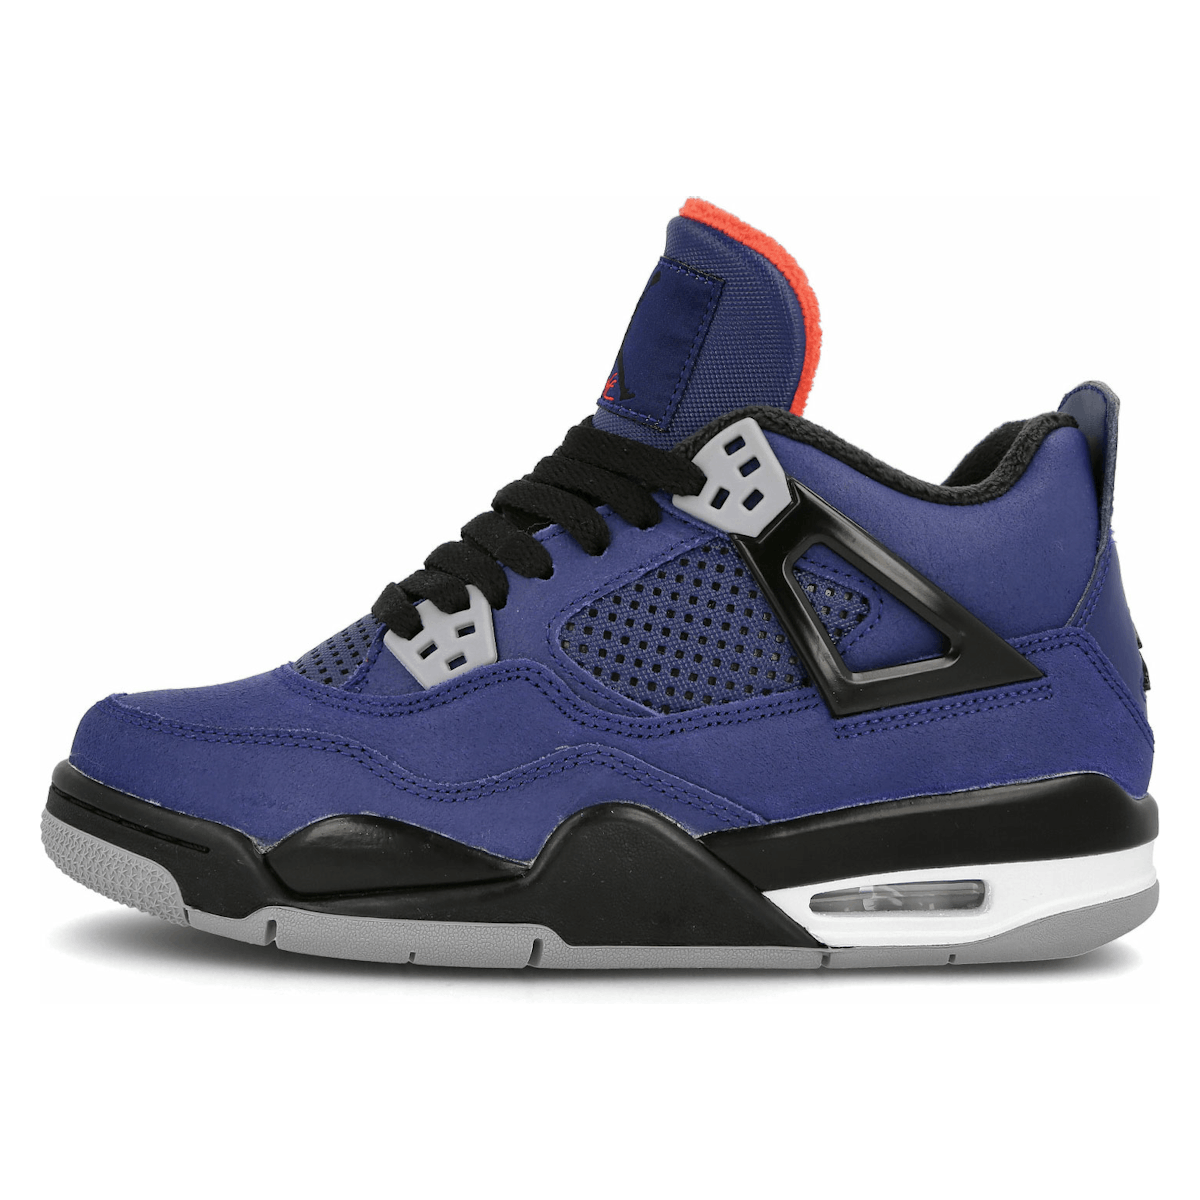 Jordan 4 Retro Winterized Loyal Blue (GS)